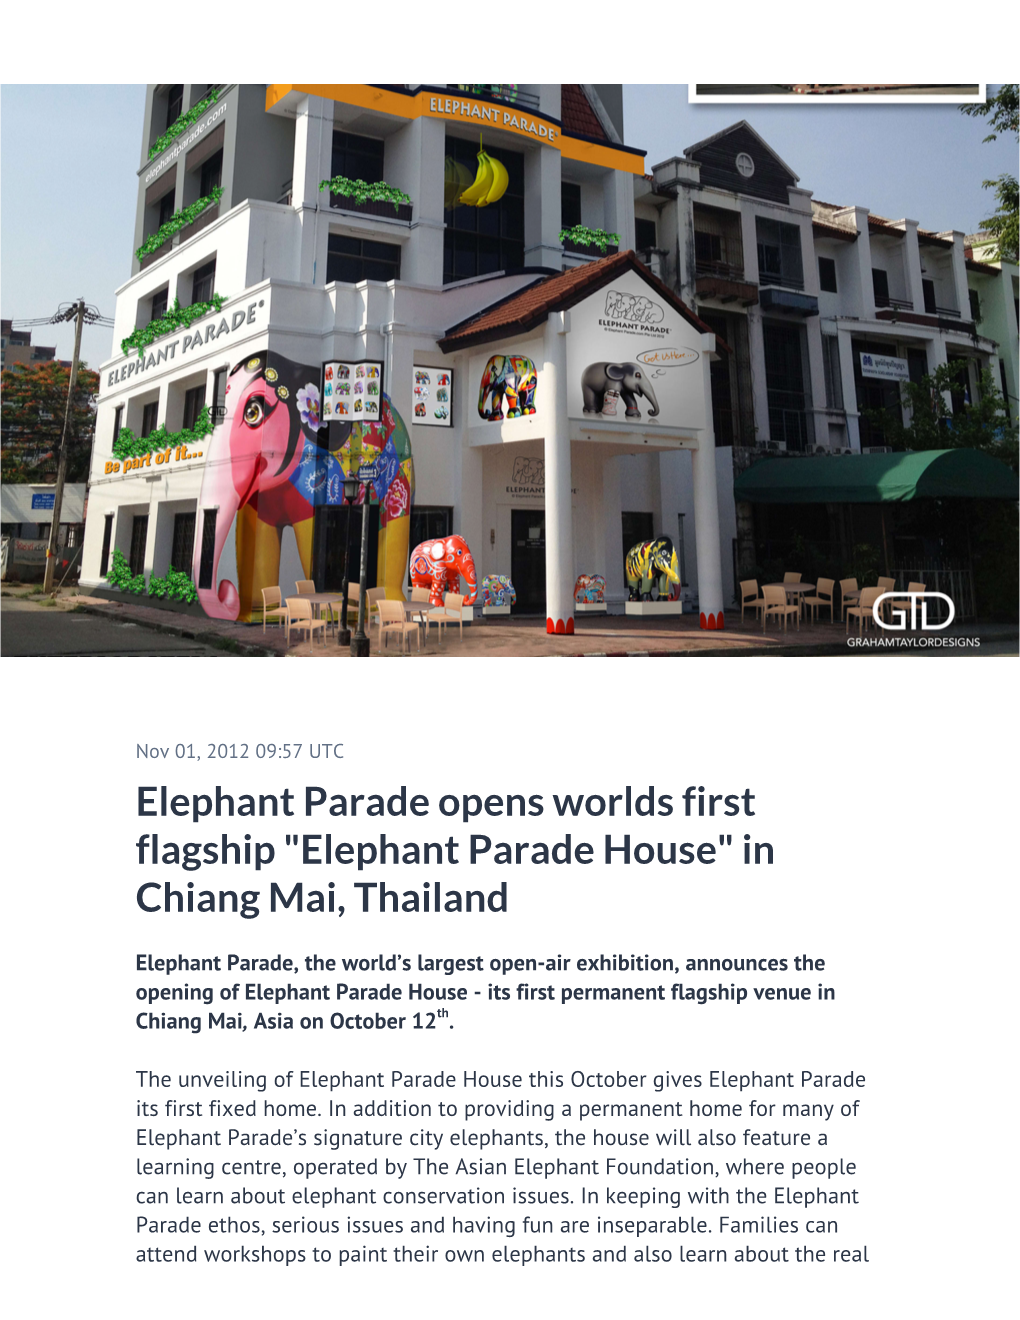 "Elephant Parade House" in Chiang Mai, Thailand